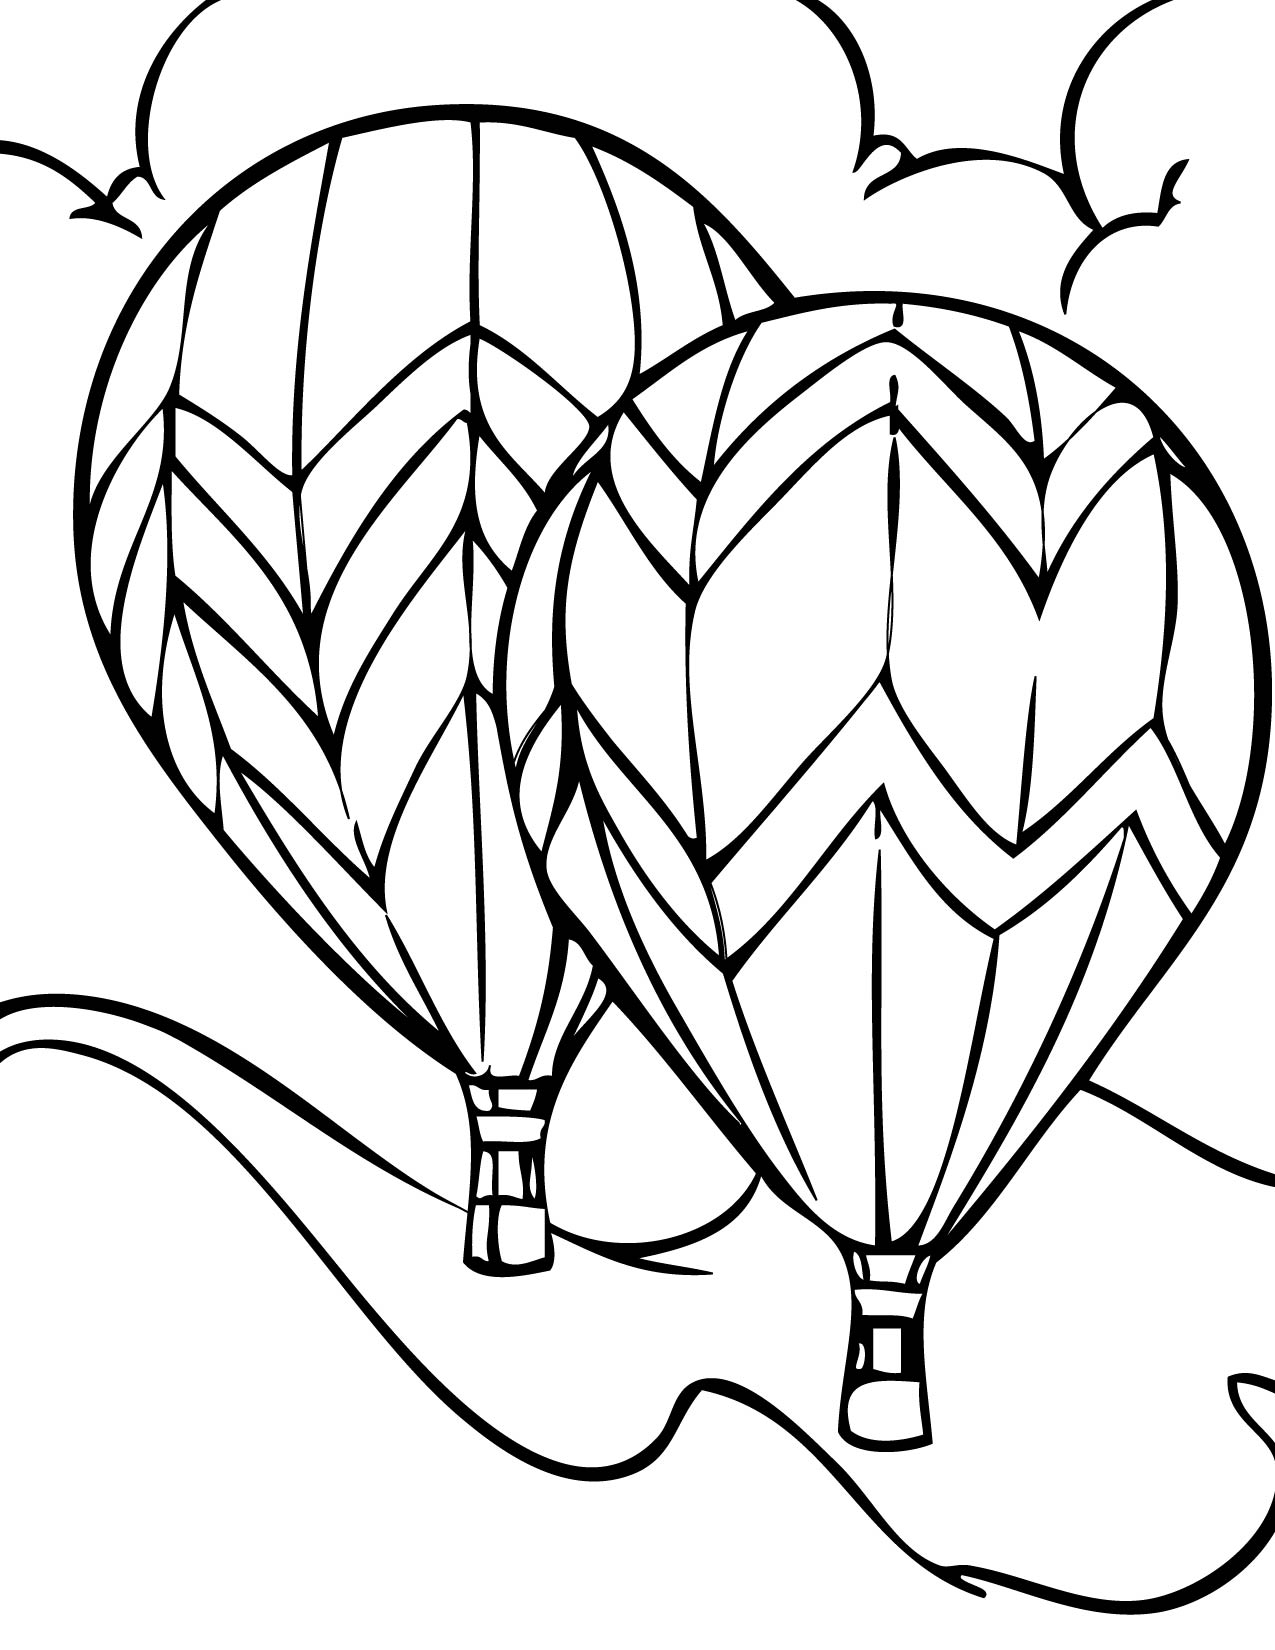 Hot Air Balloon Coloring Page Image